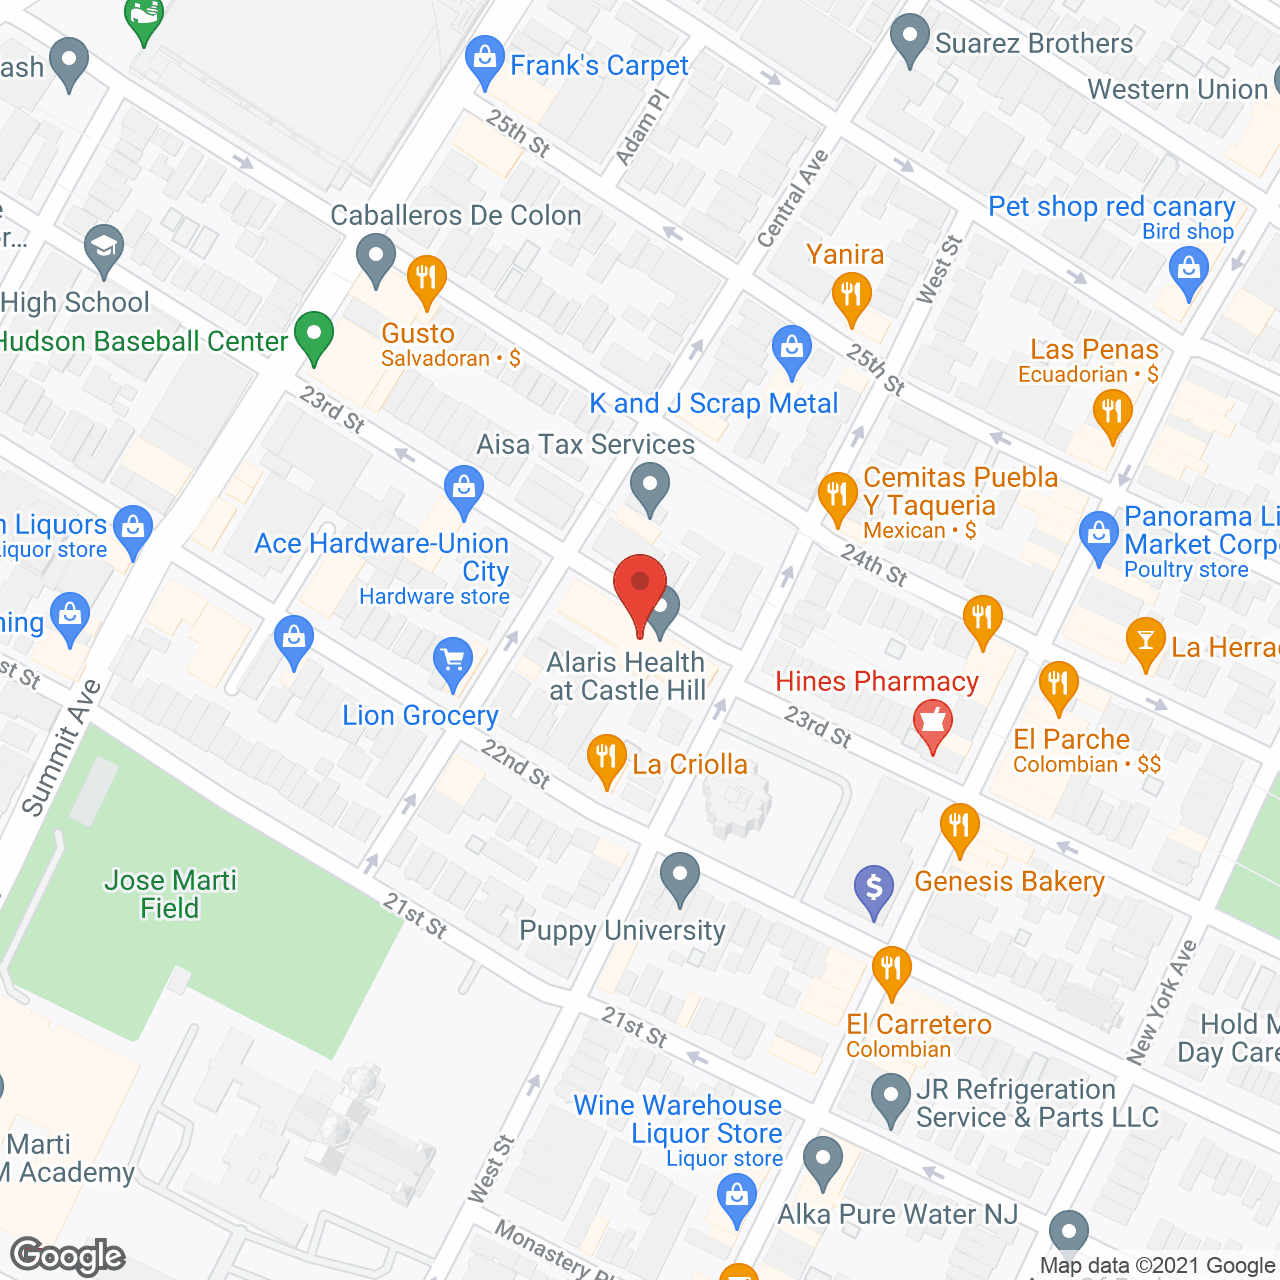 Castle Hill Health Care Center in google map